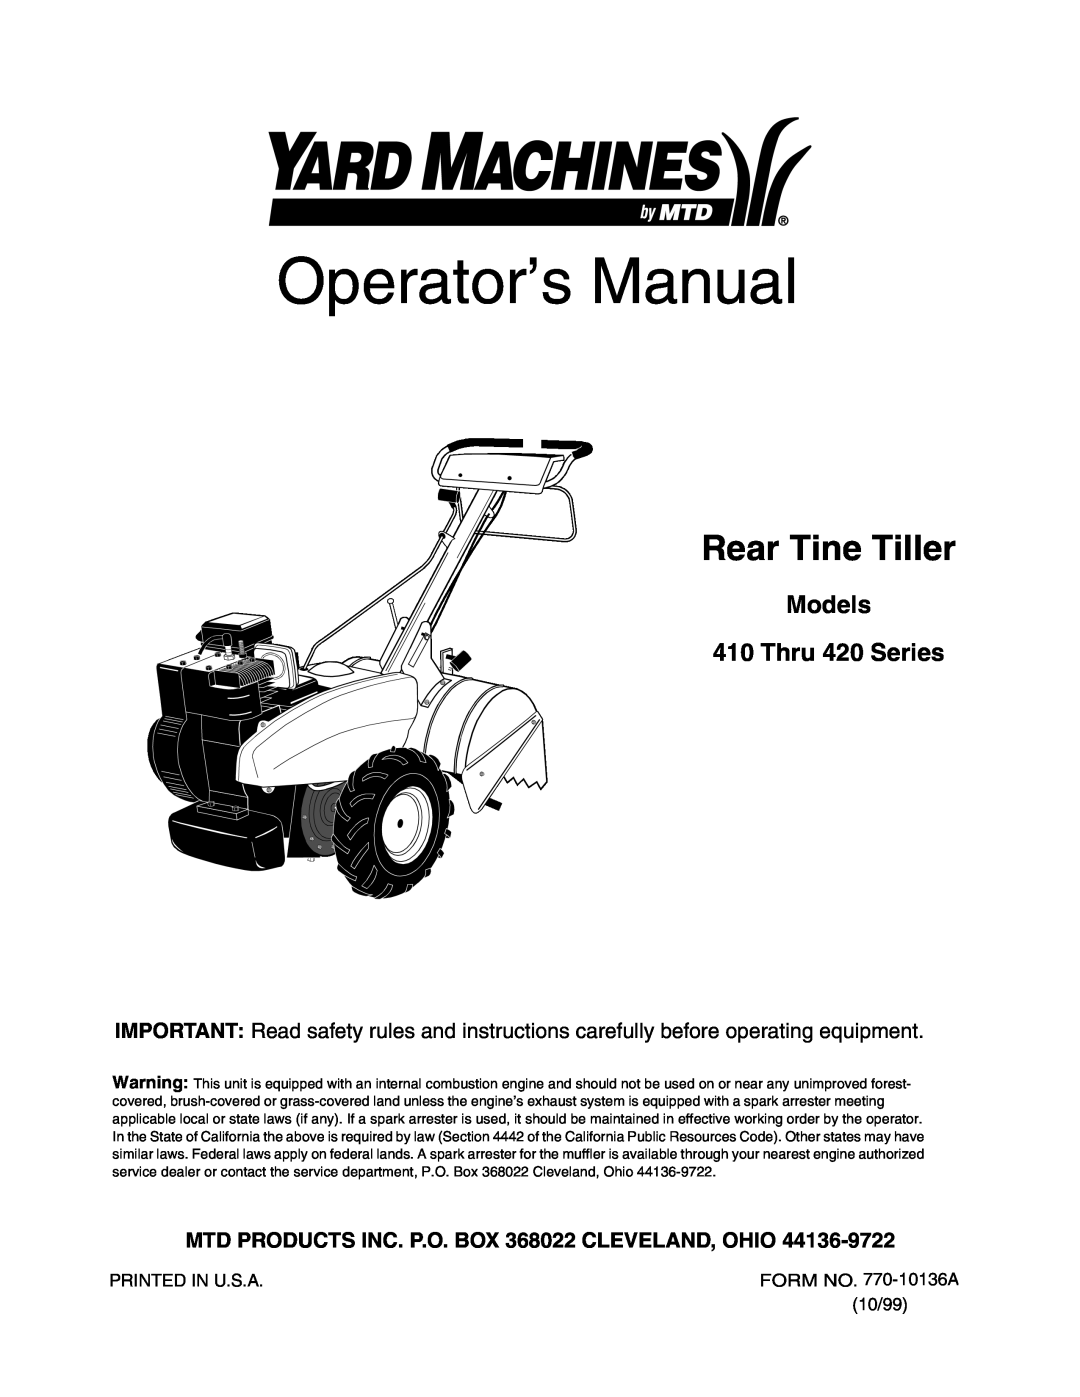 MTD manual Operator’s Manual, Rear Tine Tiller, Models 410 Thru 420 Series 